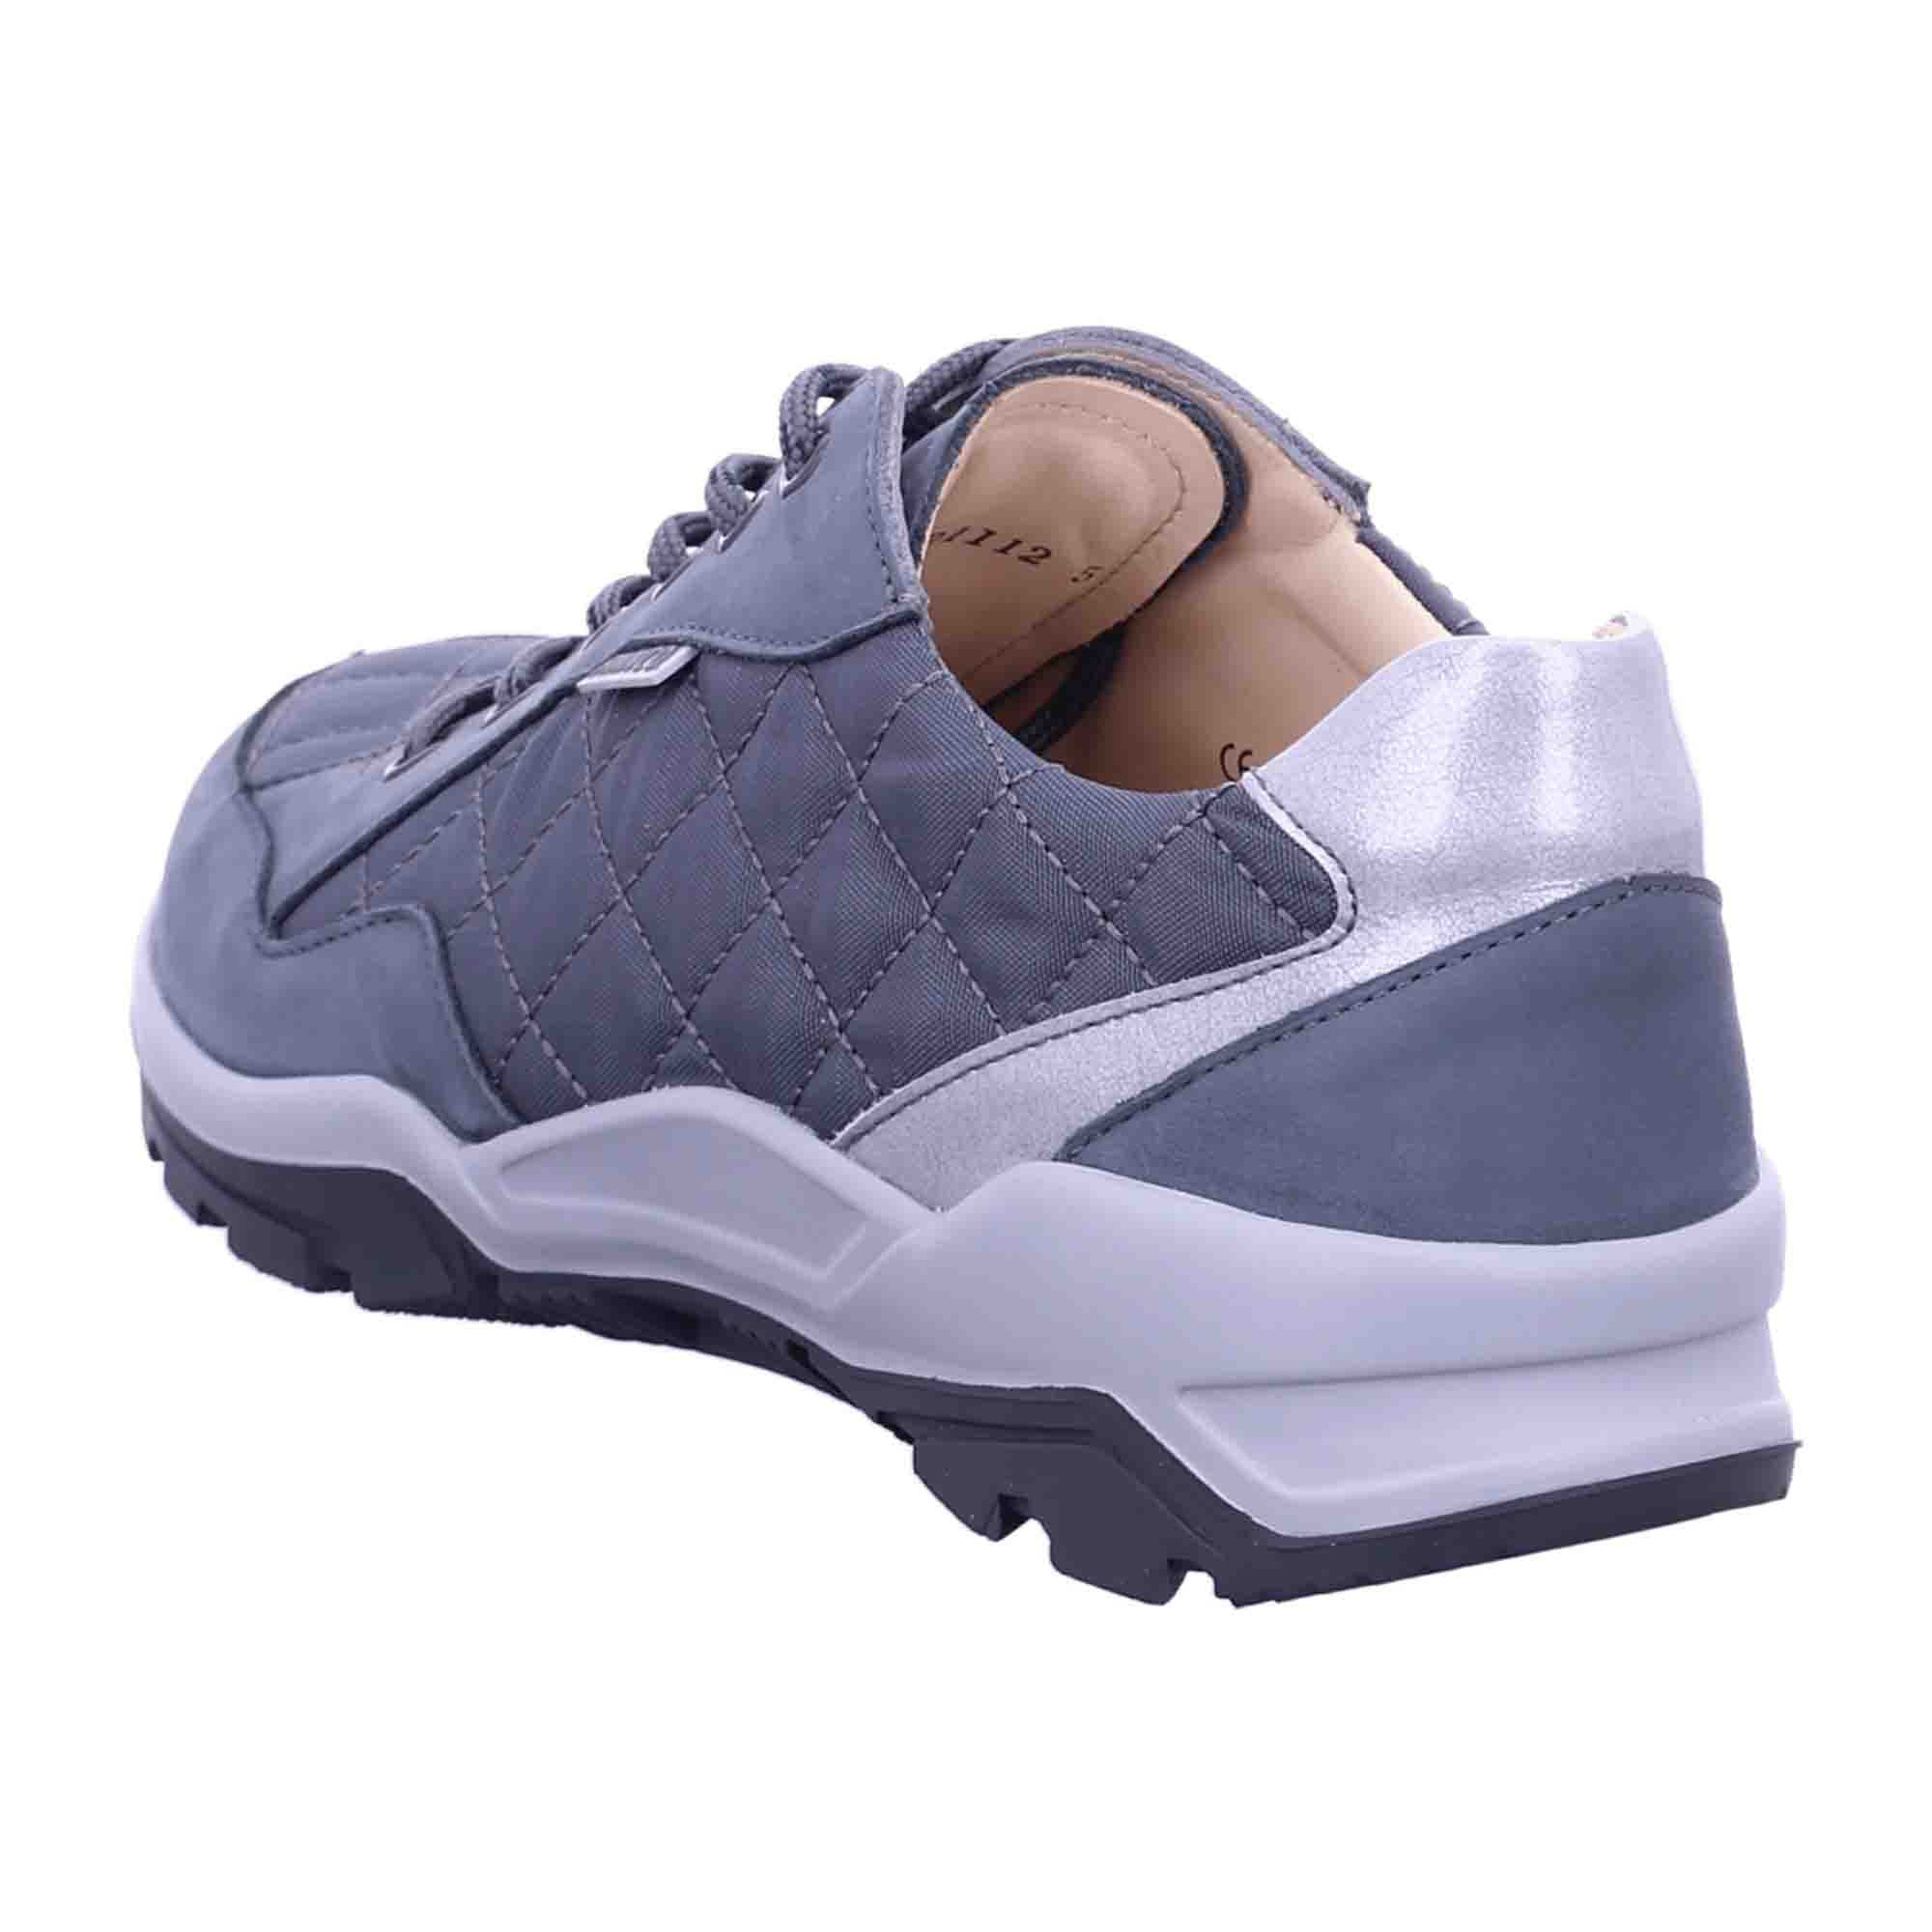 Finn Comfort Tessin Women's Comfort Shoes - Stylish Grey